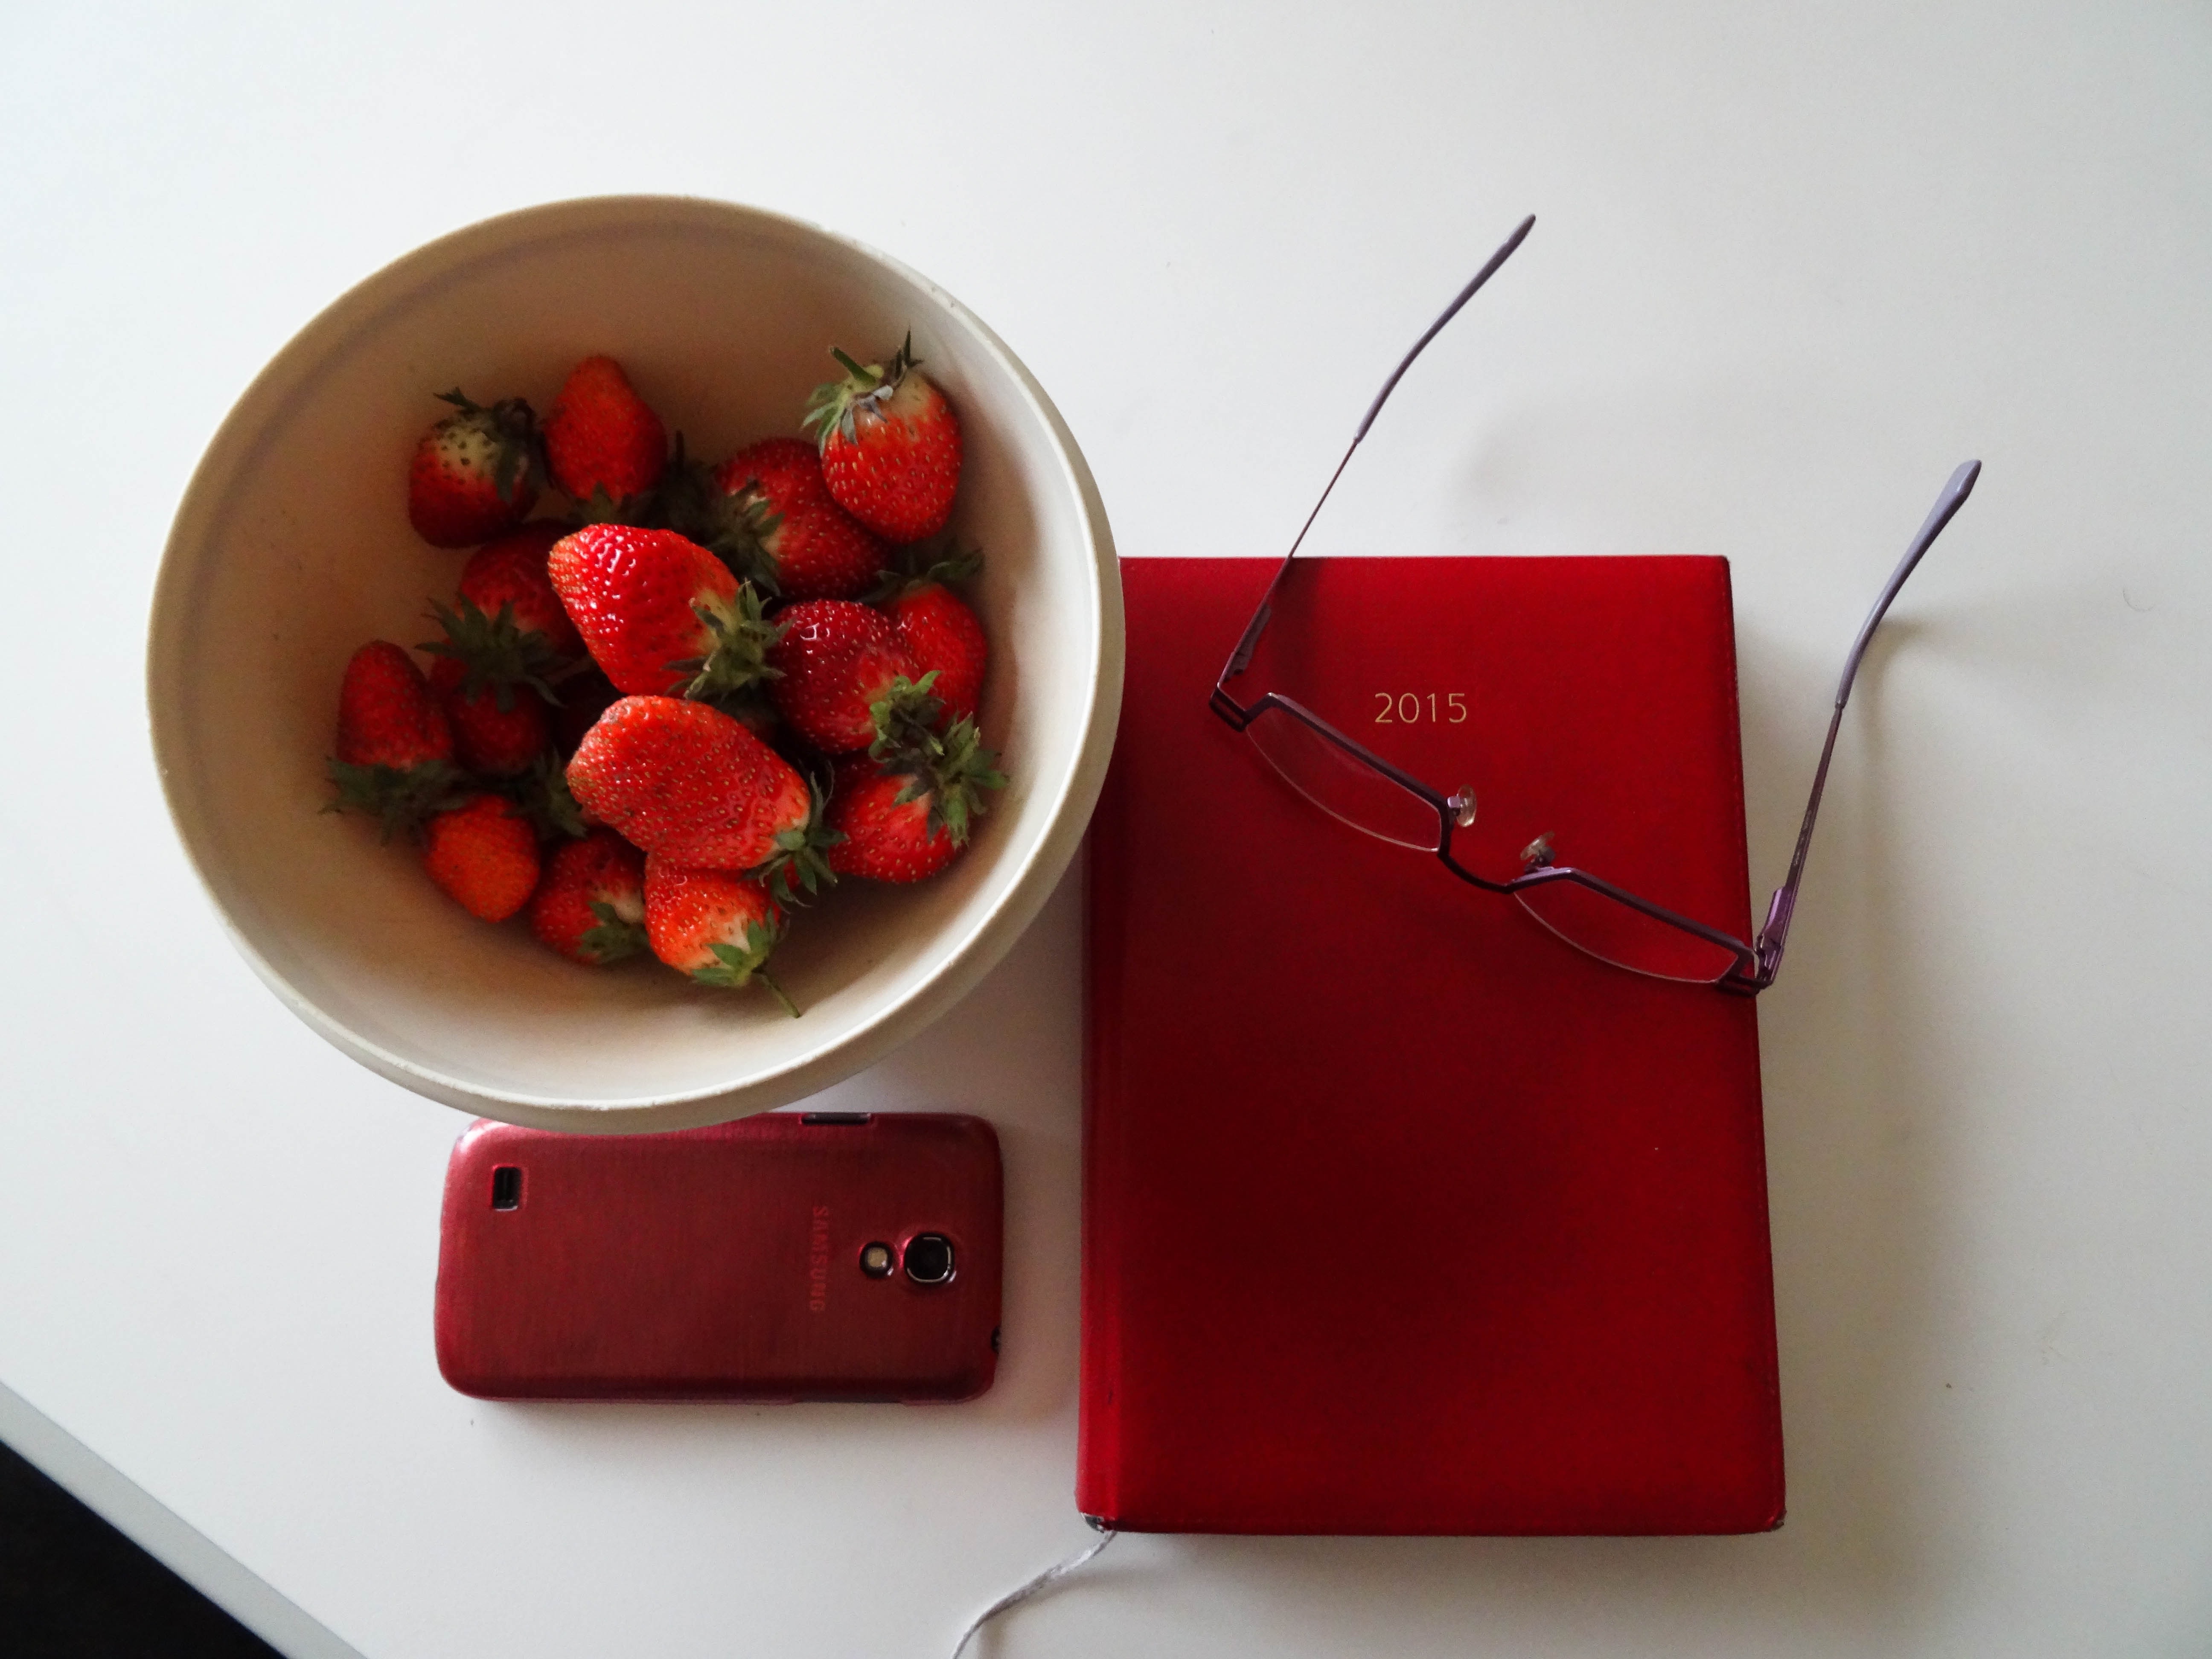 strawberry on ceramic bowl;red smartphone;red 2015 print book;red framed eyeglasses